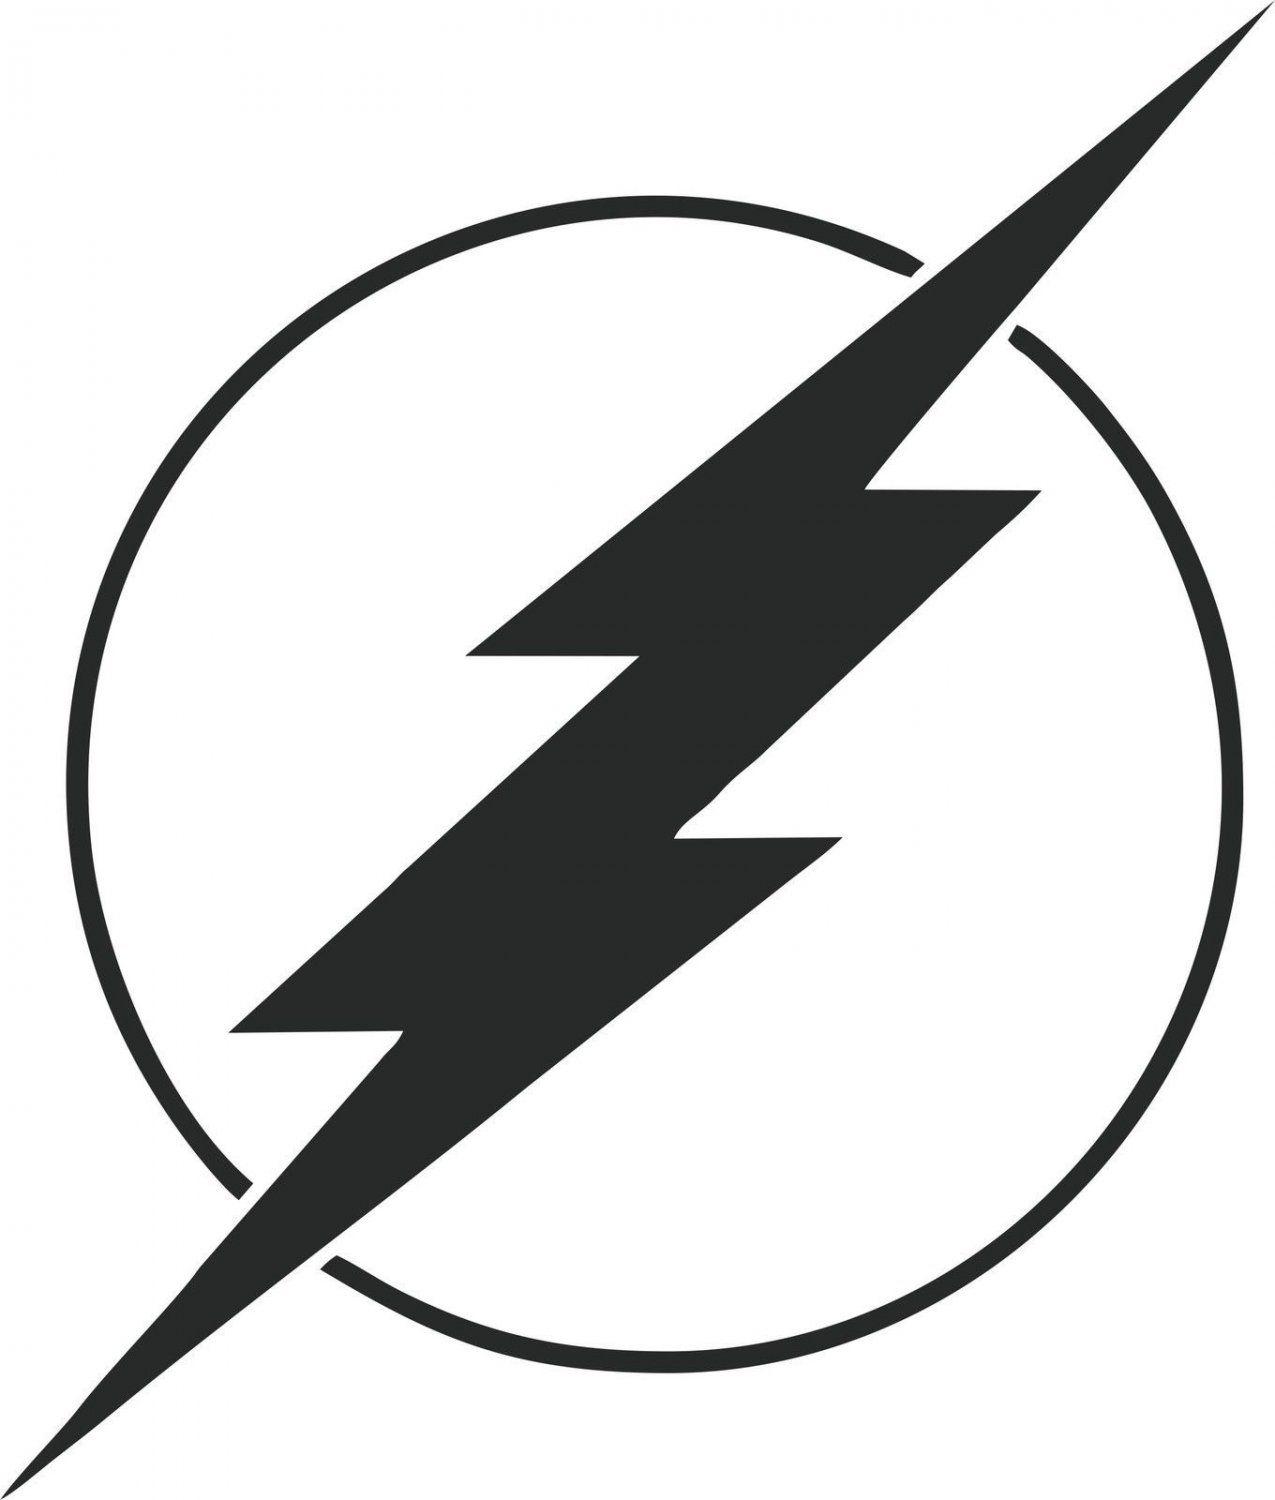 Circle with Lightning Bolt Car Logo - Free Lightning Bolt Logos, Download Free Clip Art, Free Clip Art on ...